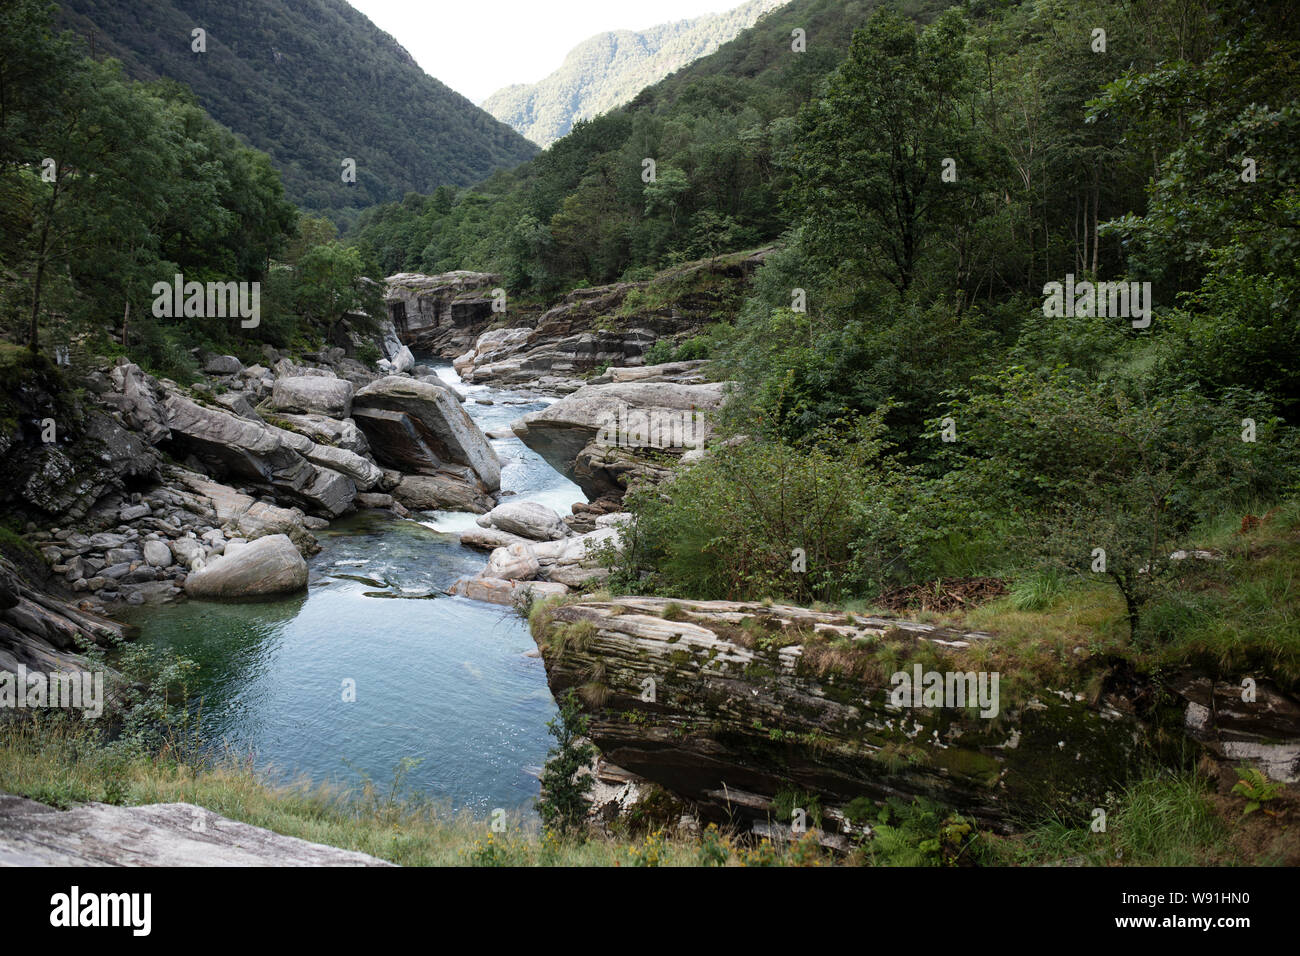 The Verzasca River flows over rocks and stones in the Verzasca Valley in Lavertezzo, in the Italian region of Ticino, Switzerland. Stock Photo